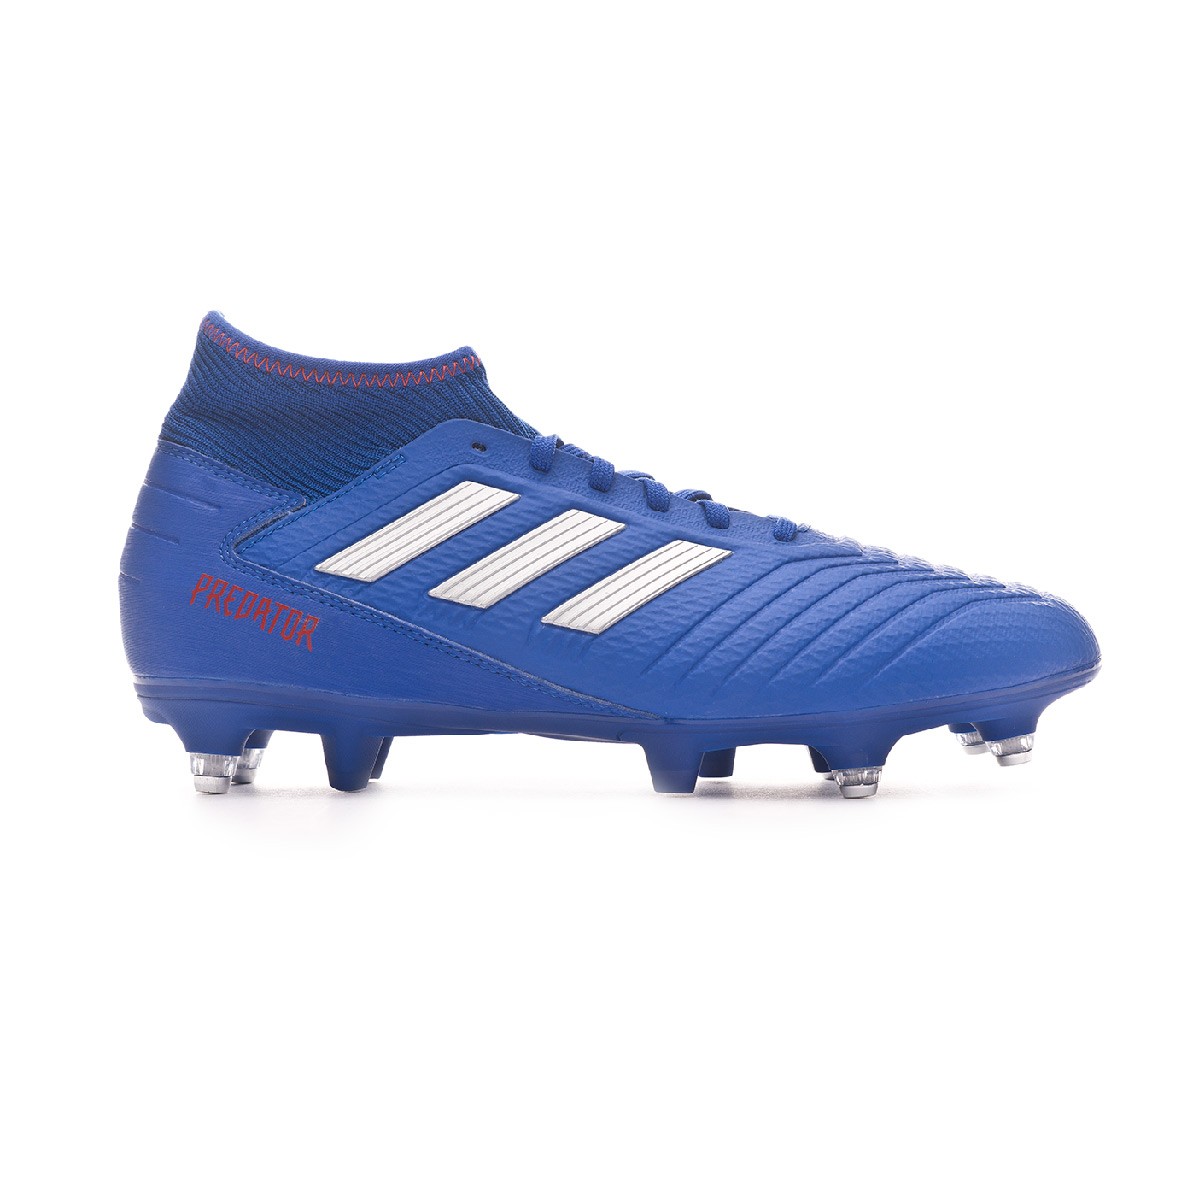 adidas predator 19.3 sg football boots